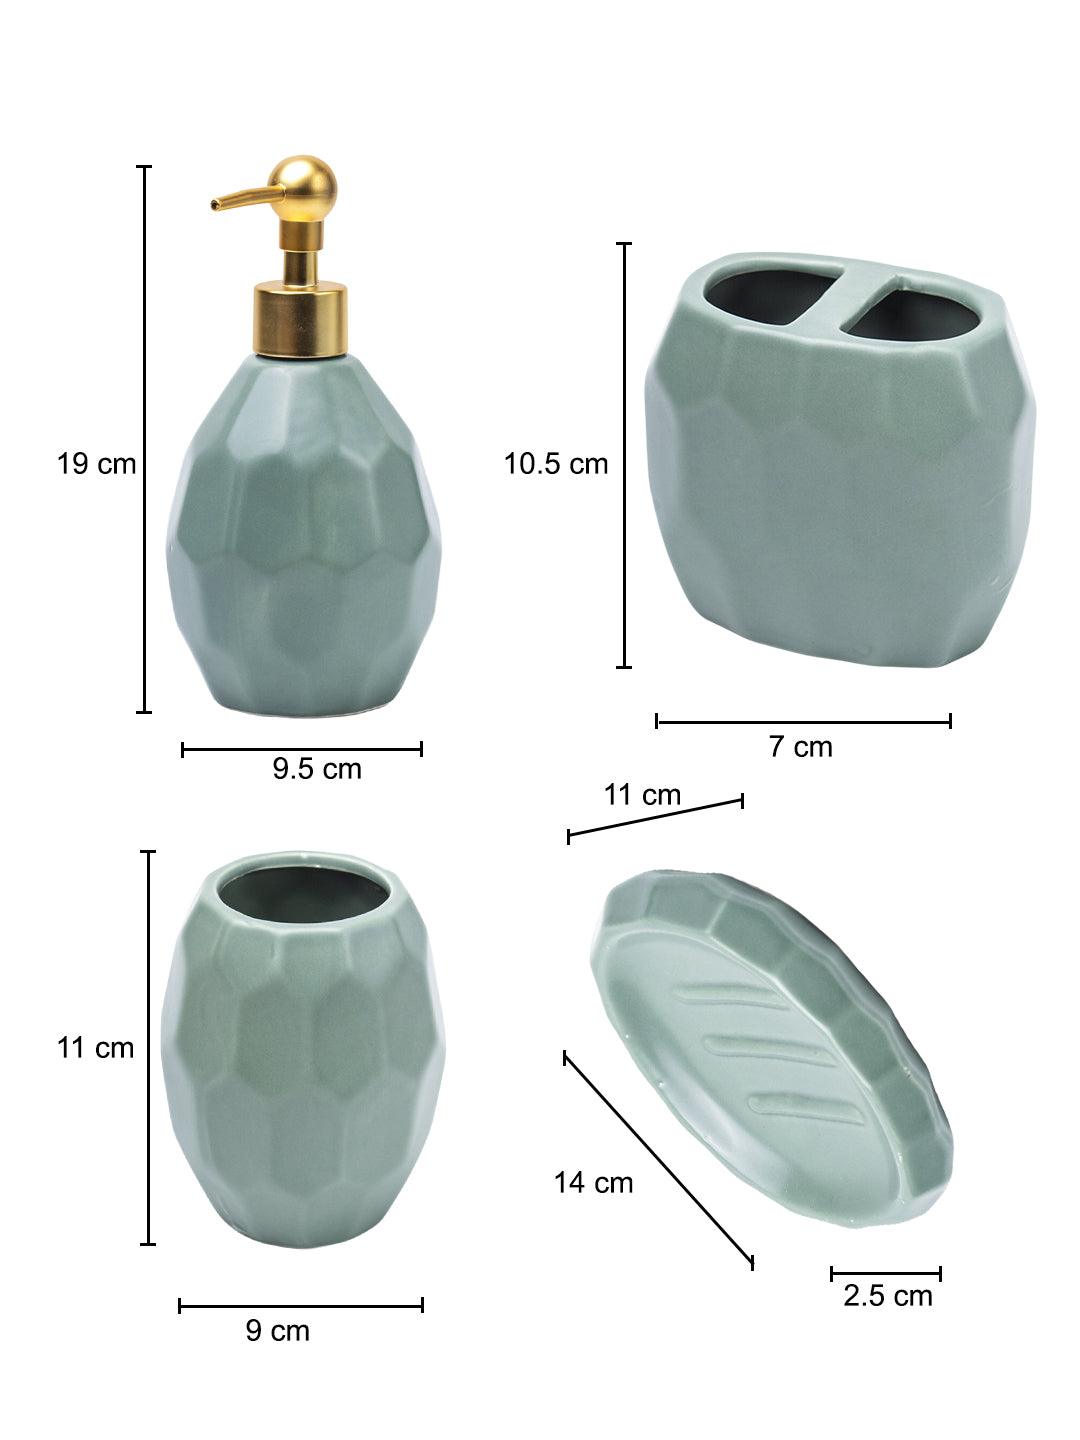 Green Ceramic Bathroom Set Of 4 - Stone Finish, Bath Accessories - 7